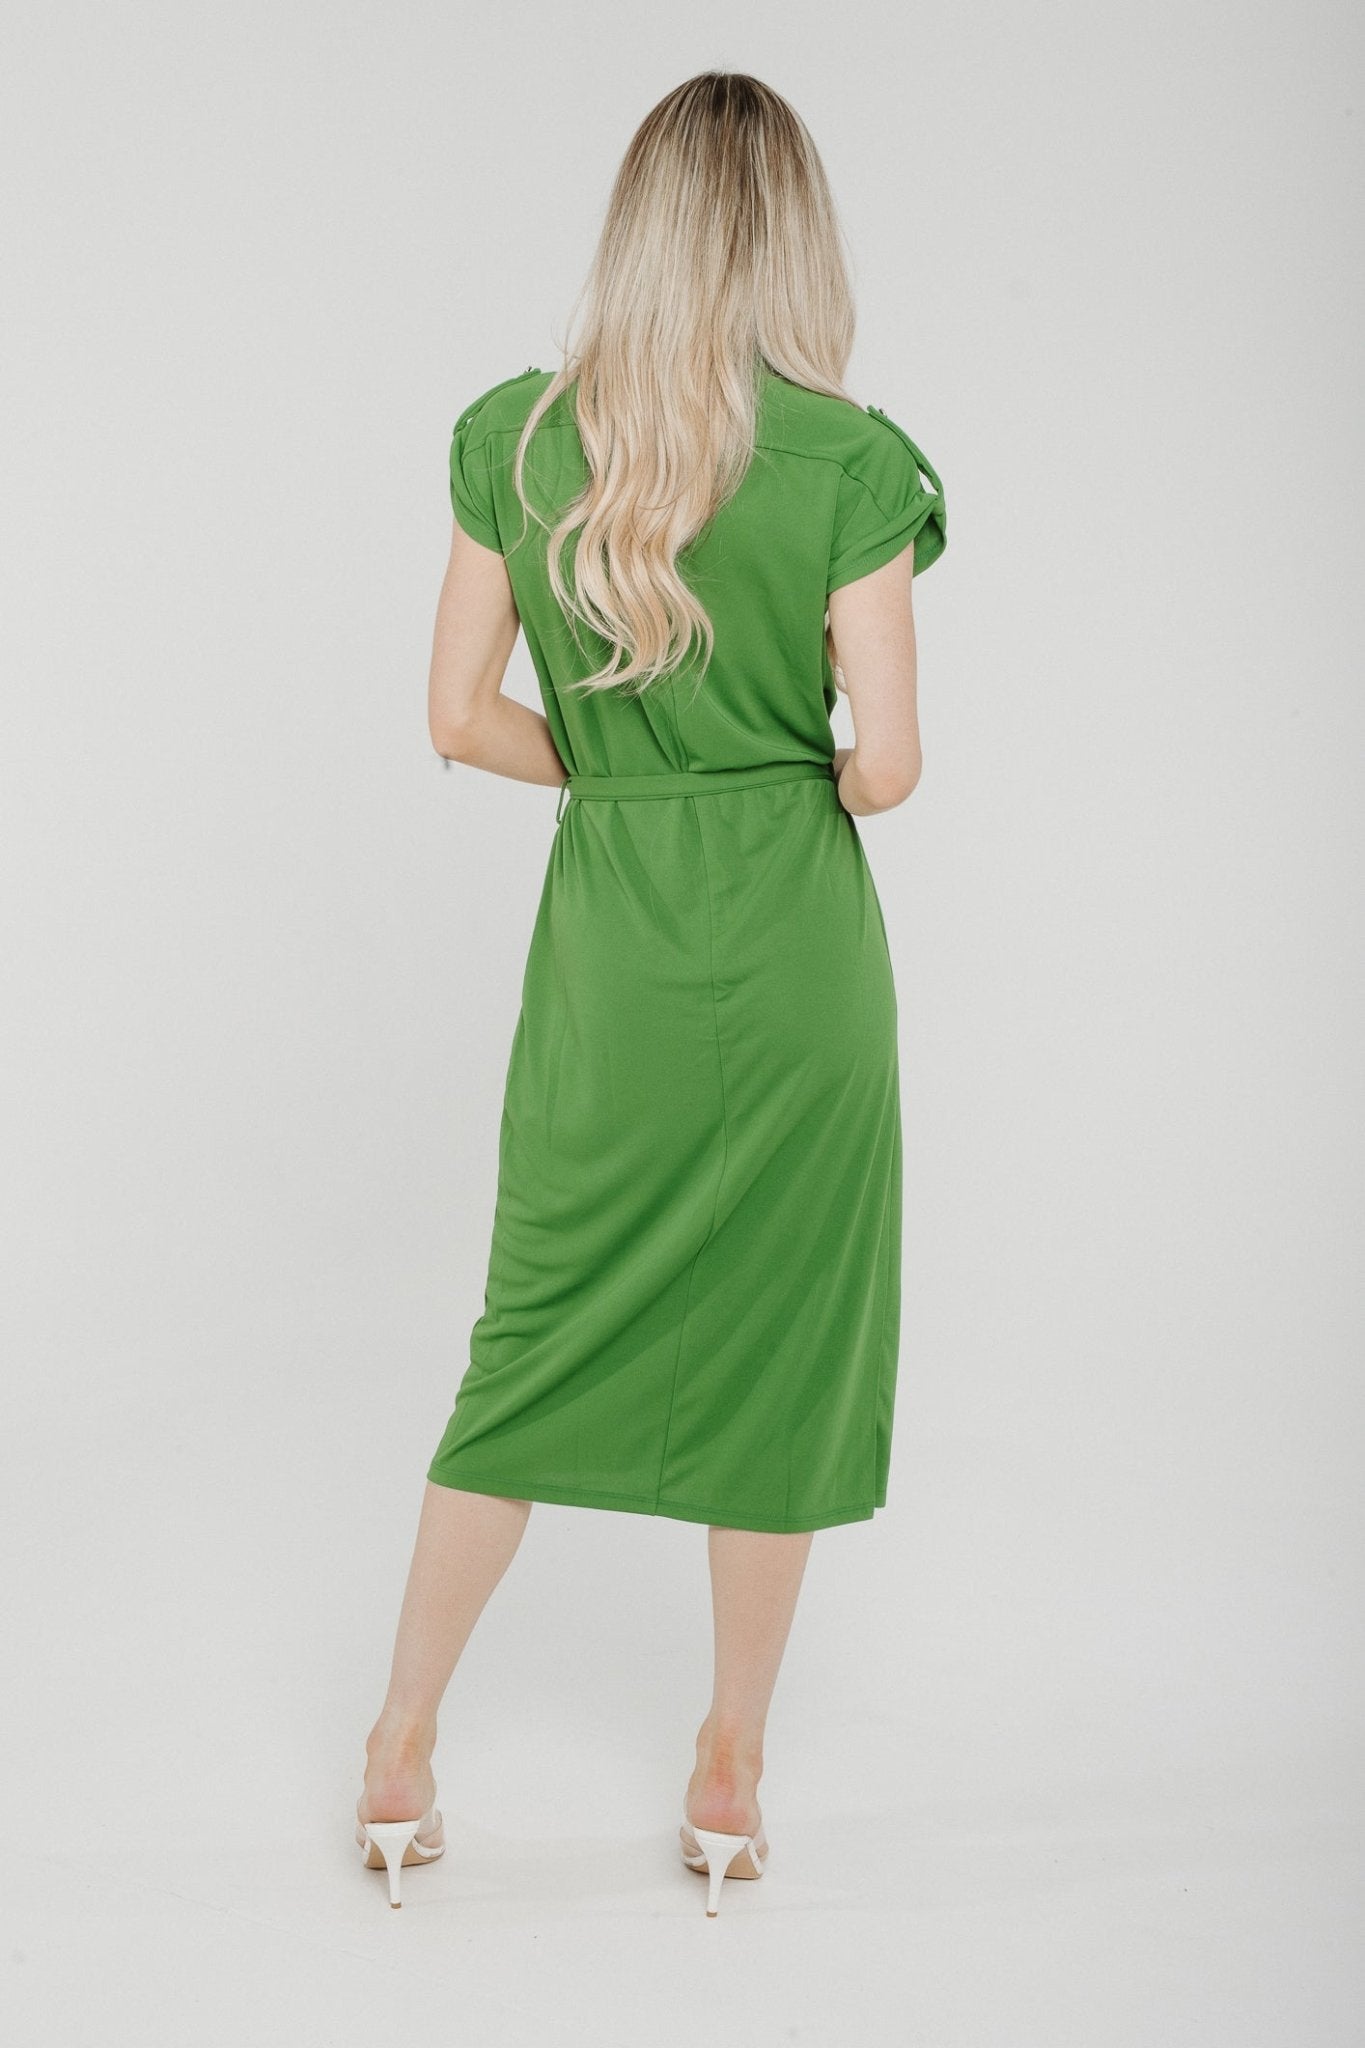 Holly Cap Sleeve Shirt Dress In Green - The Walk in Wardrobe